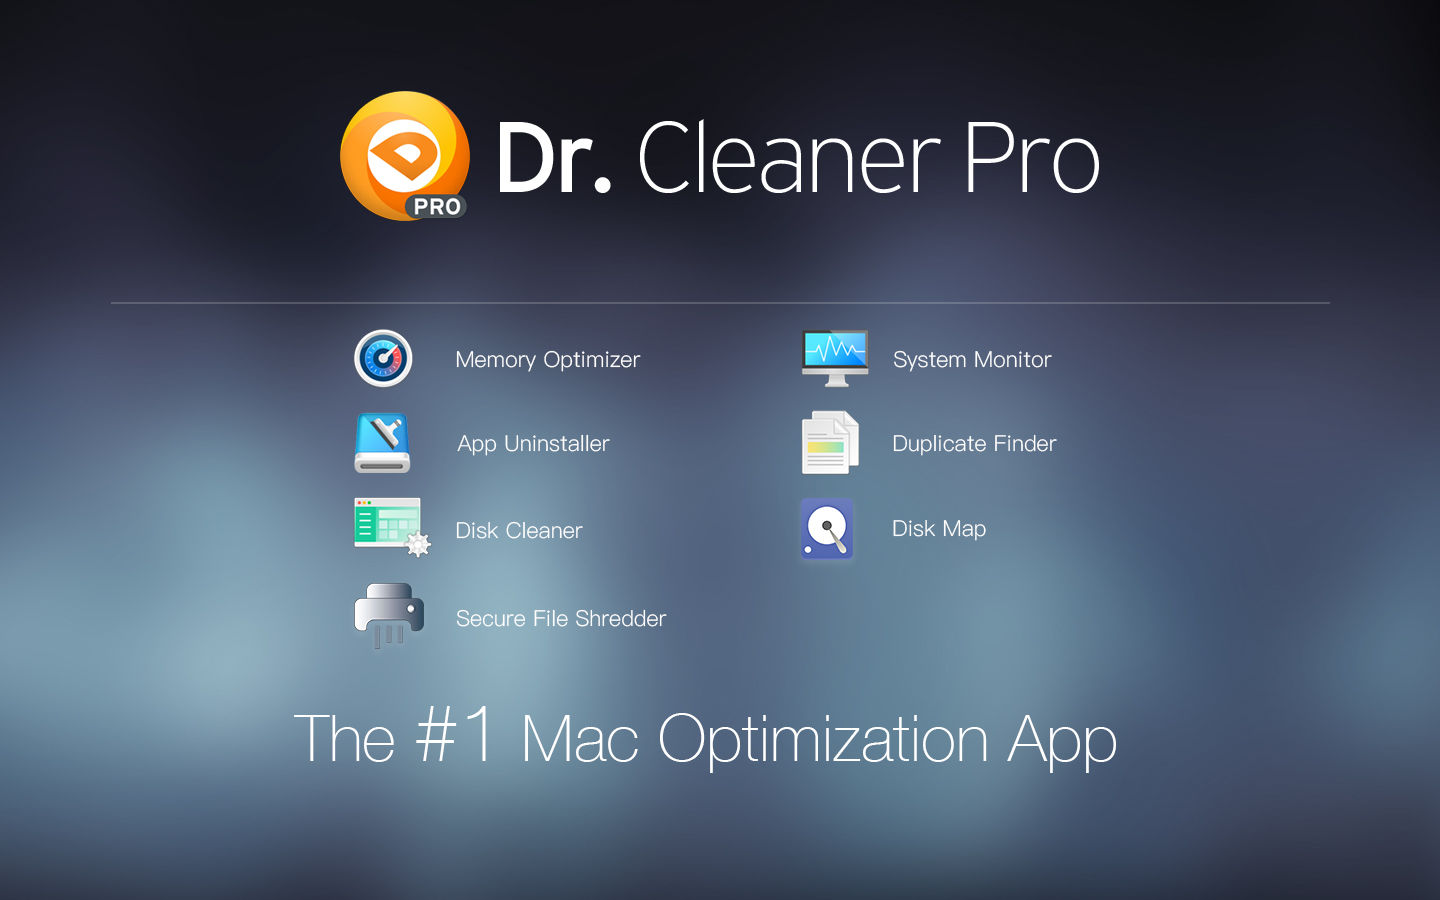 dr.cleaner mac promo code